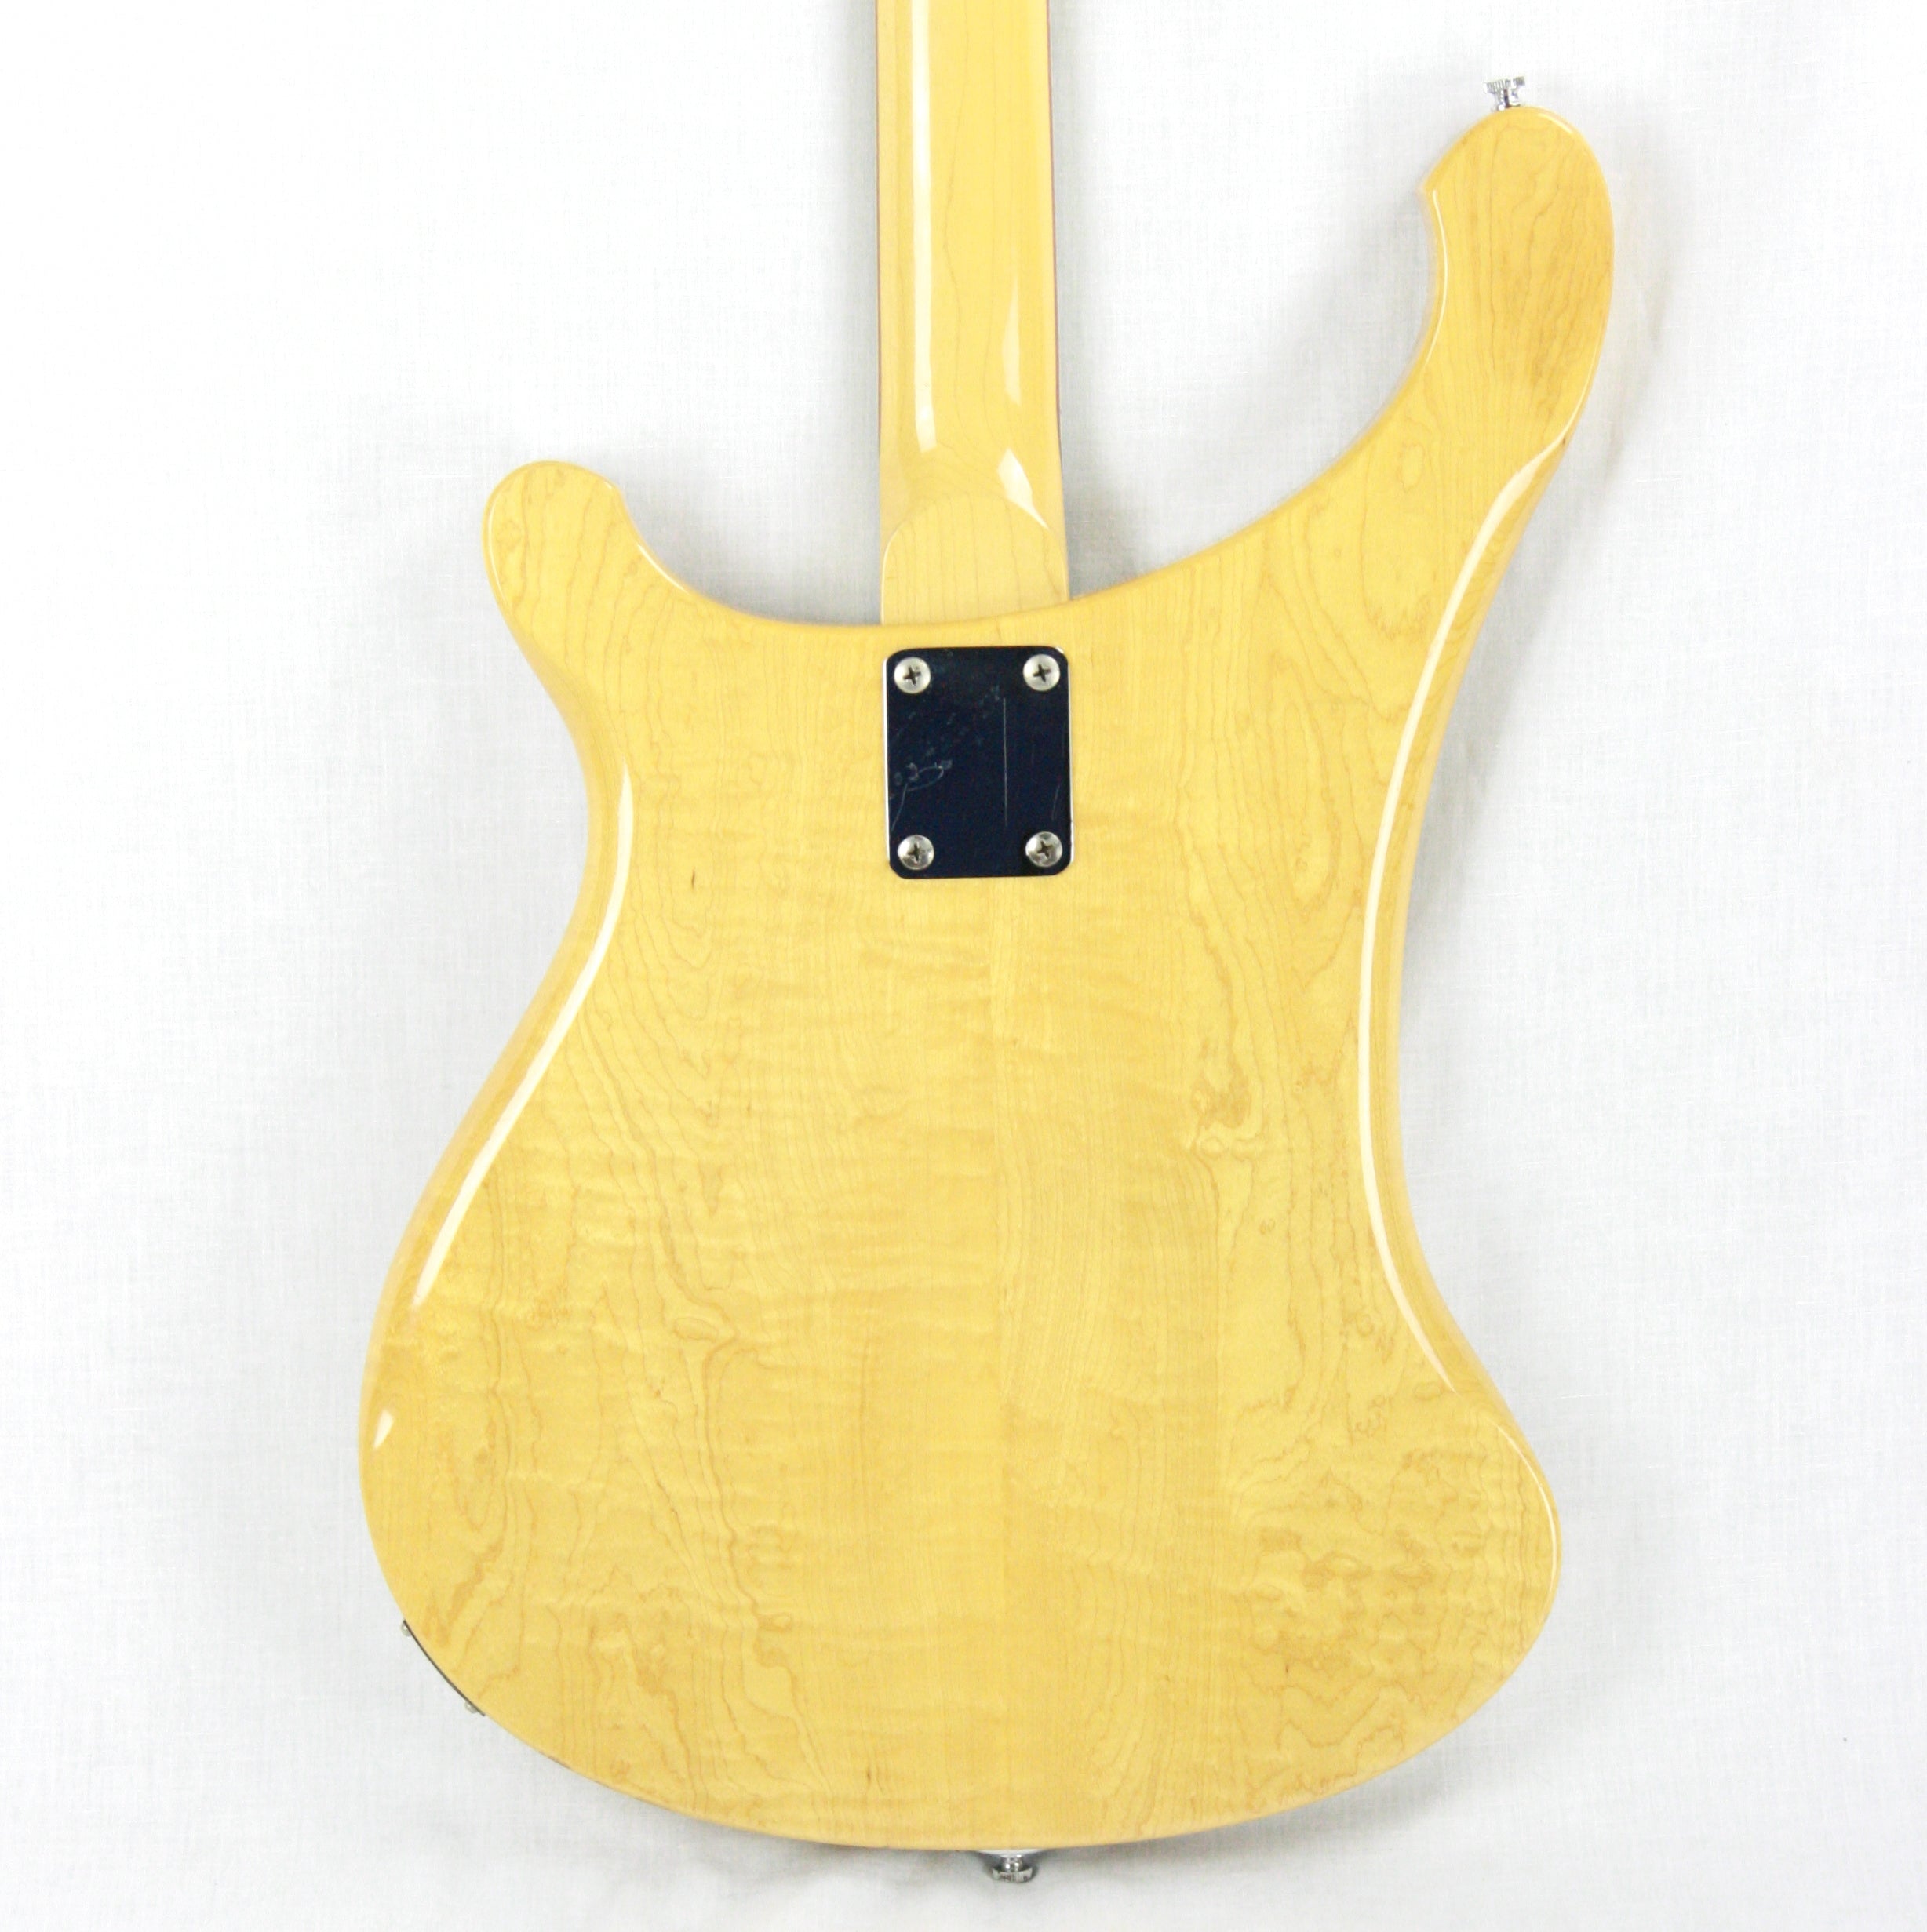 1973 Rickenbacker 480 Natural Vintage Guitar! FLAMED Body! 481 4001 6 string gtr